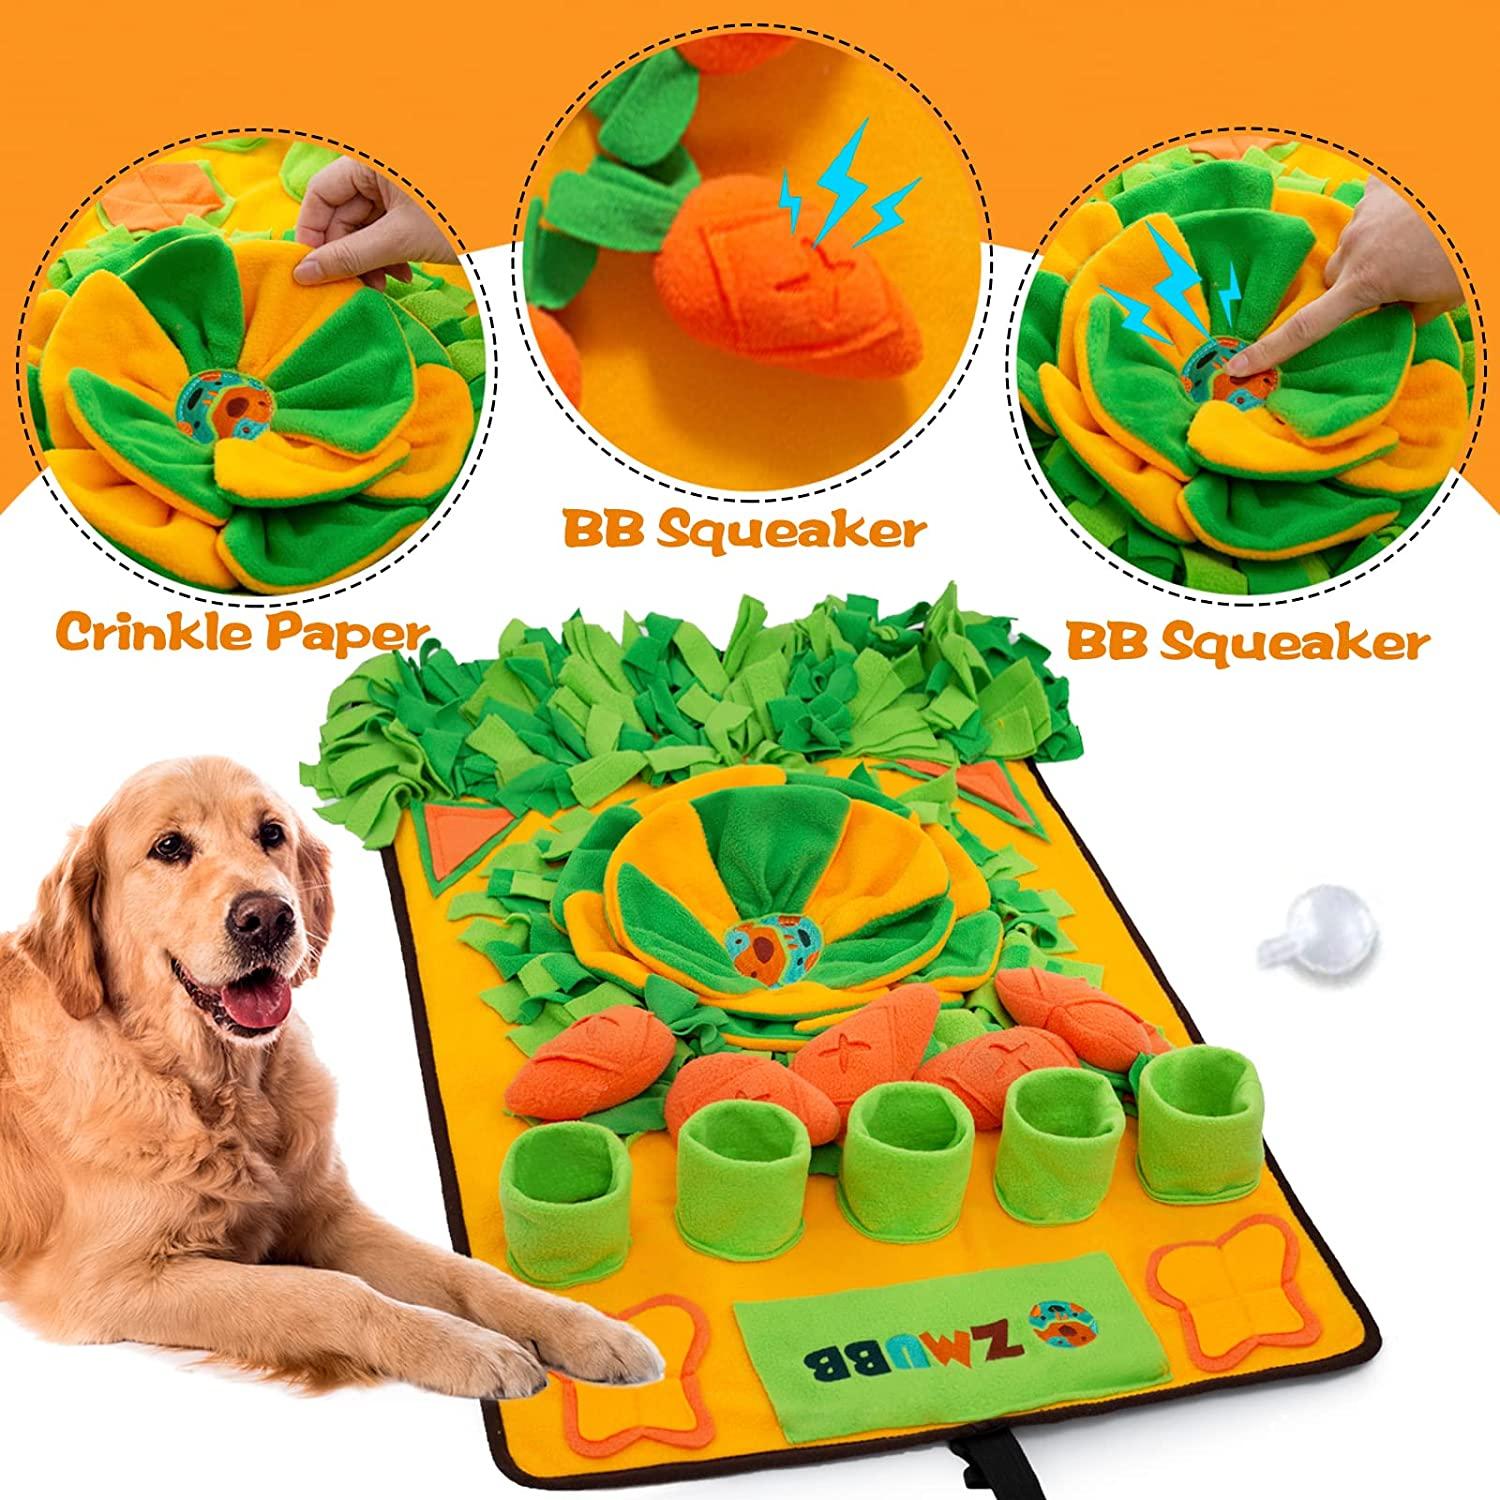 Pet Life ® 'Sniffer Snack' Interactive Feeding Pet Snuffle Mat